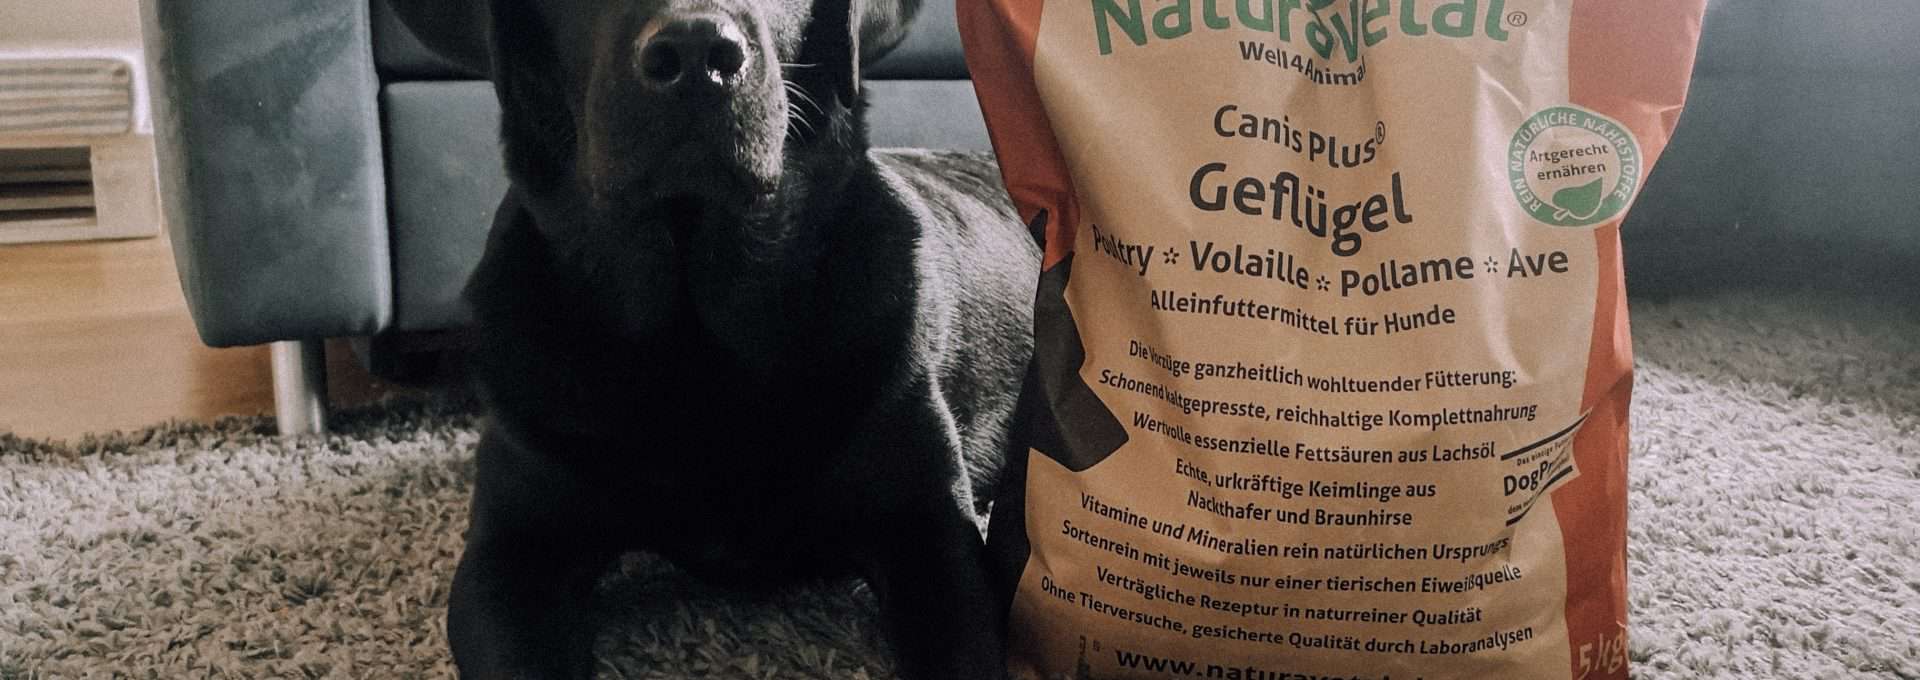 naturavetal-hundefutter-test-hund-erfahrung-bericht-blog